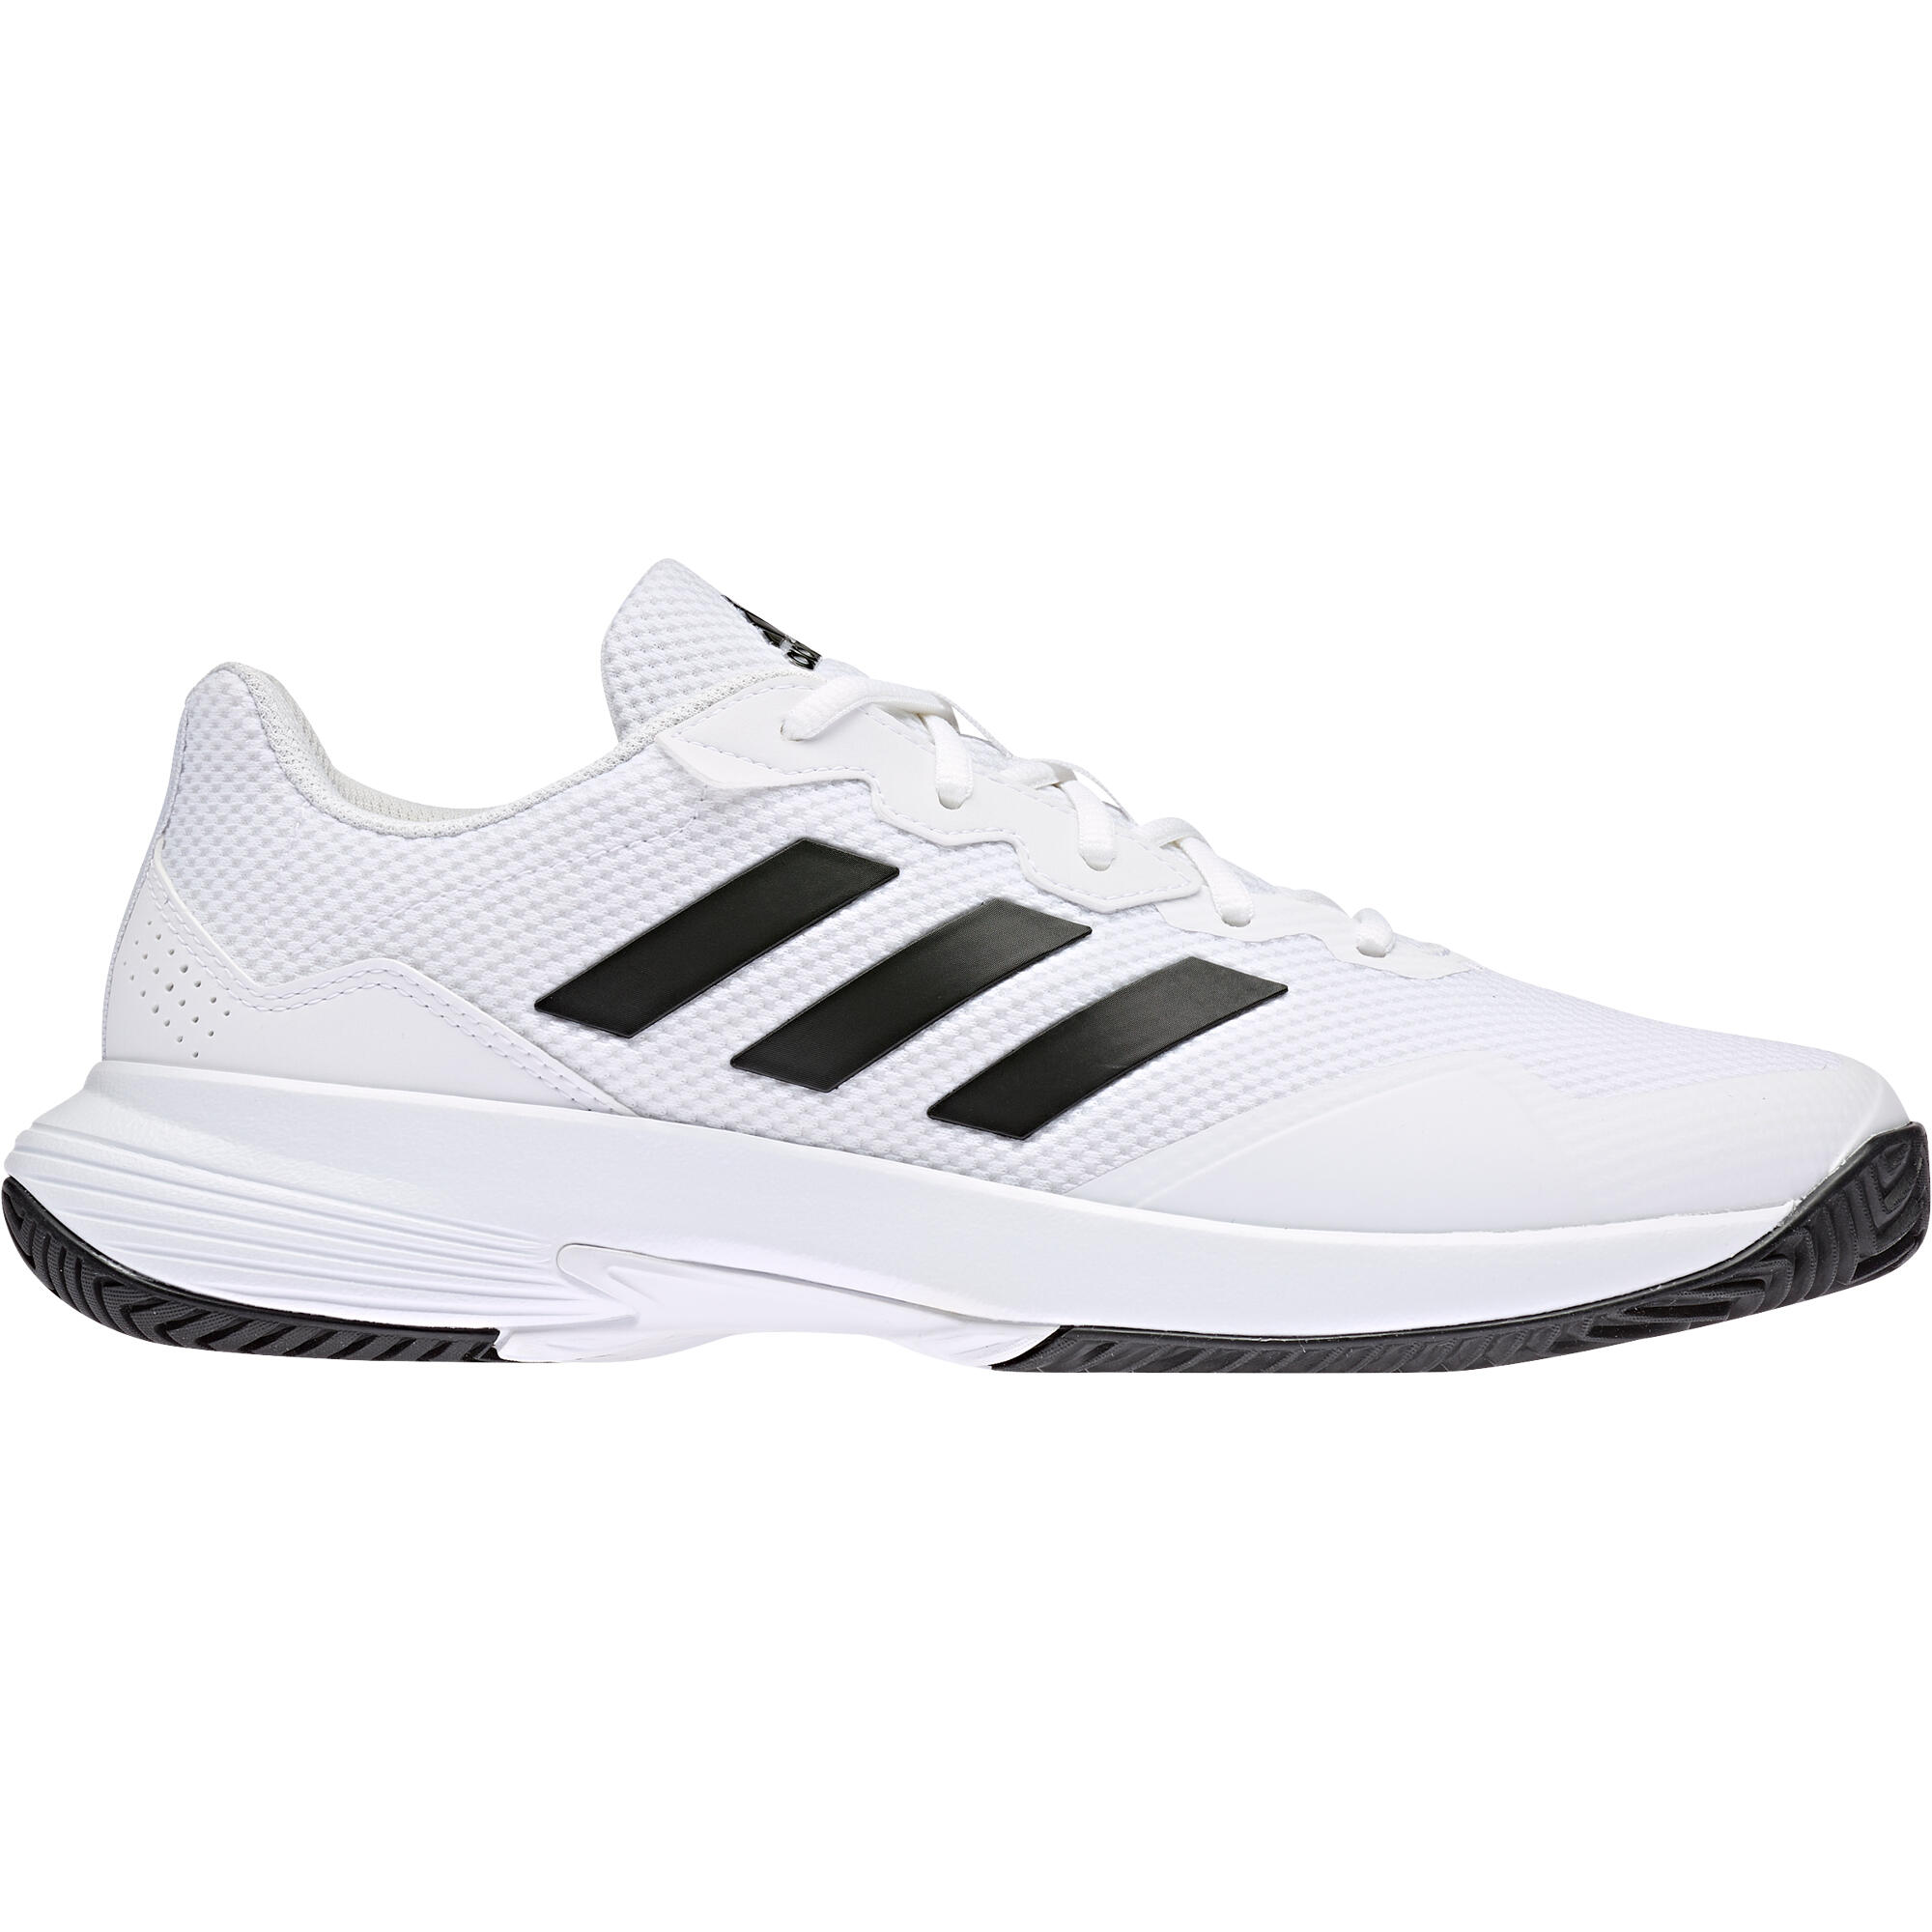 Adidas Men's Multicourt Tennis Shoes Gamecourt - White/black